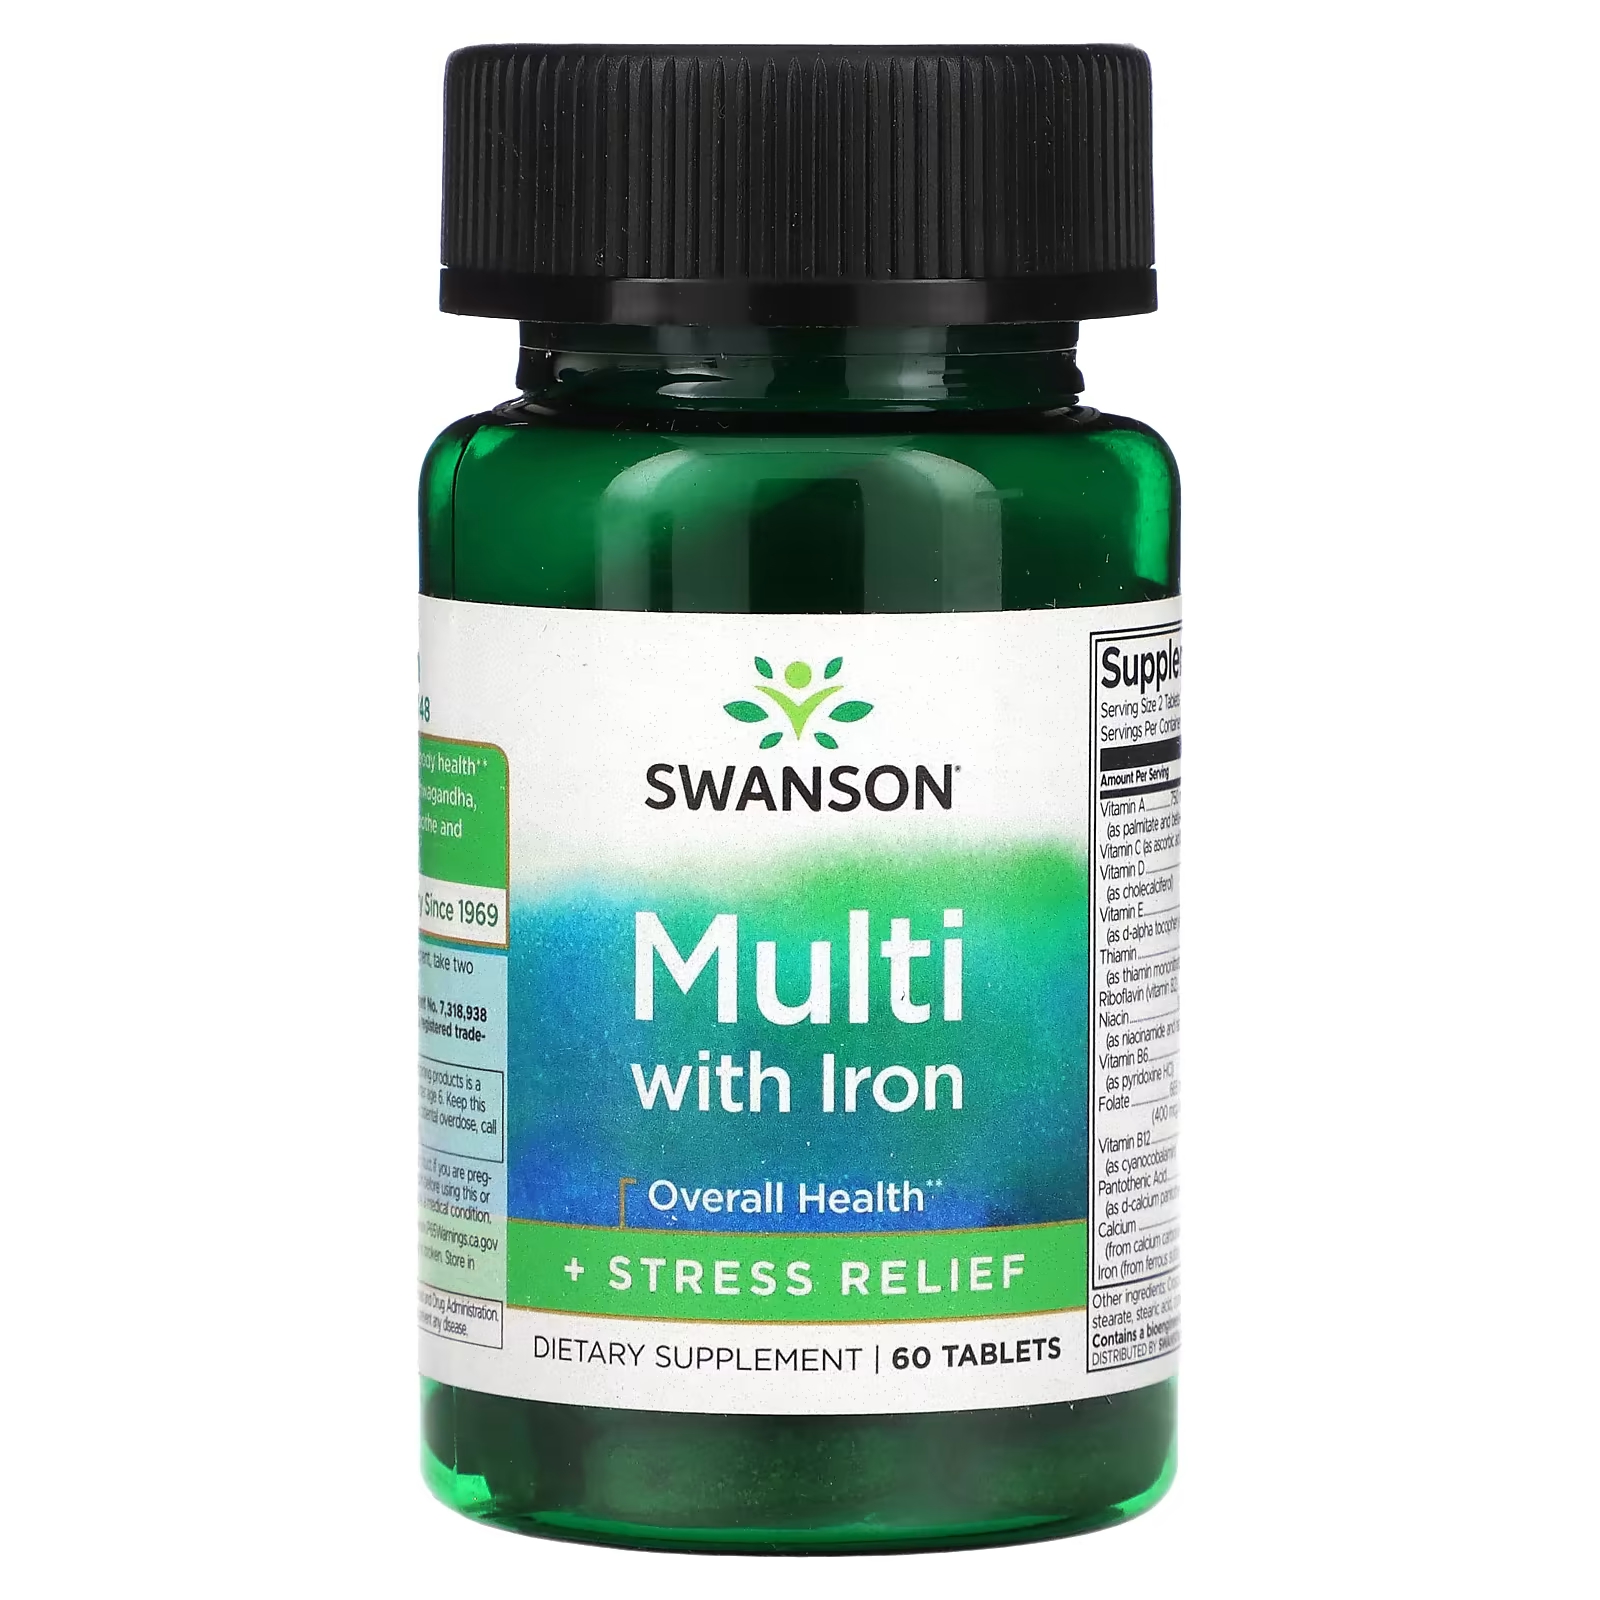 Пищевая добавка Swanson Multi с железом и снятие стресса, 60 таблеток